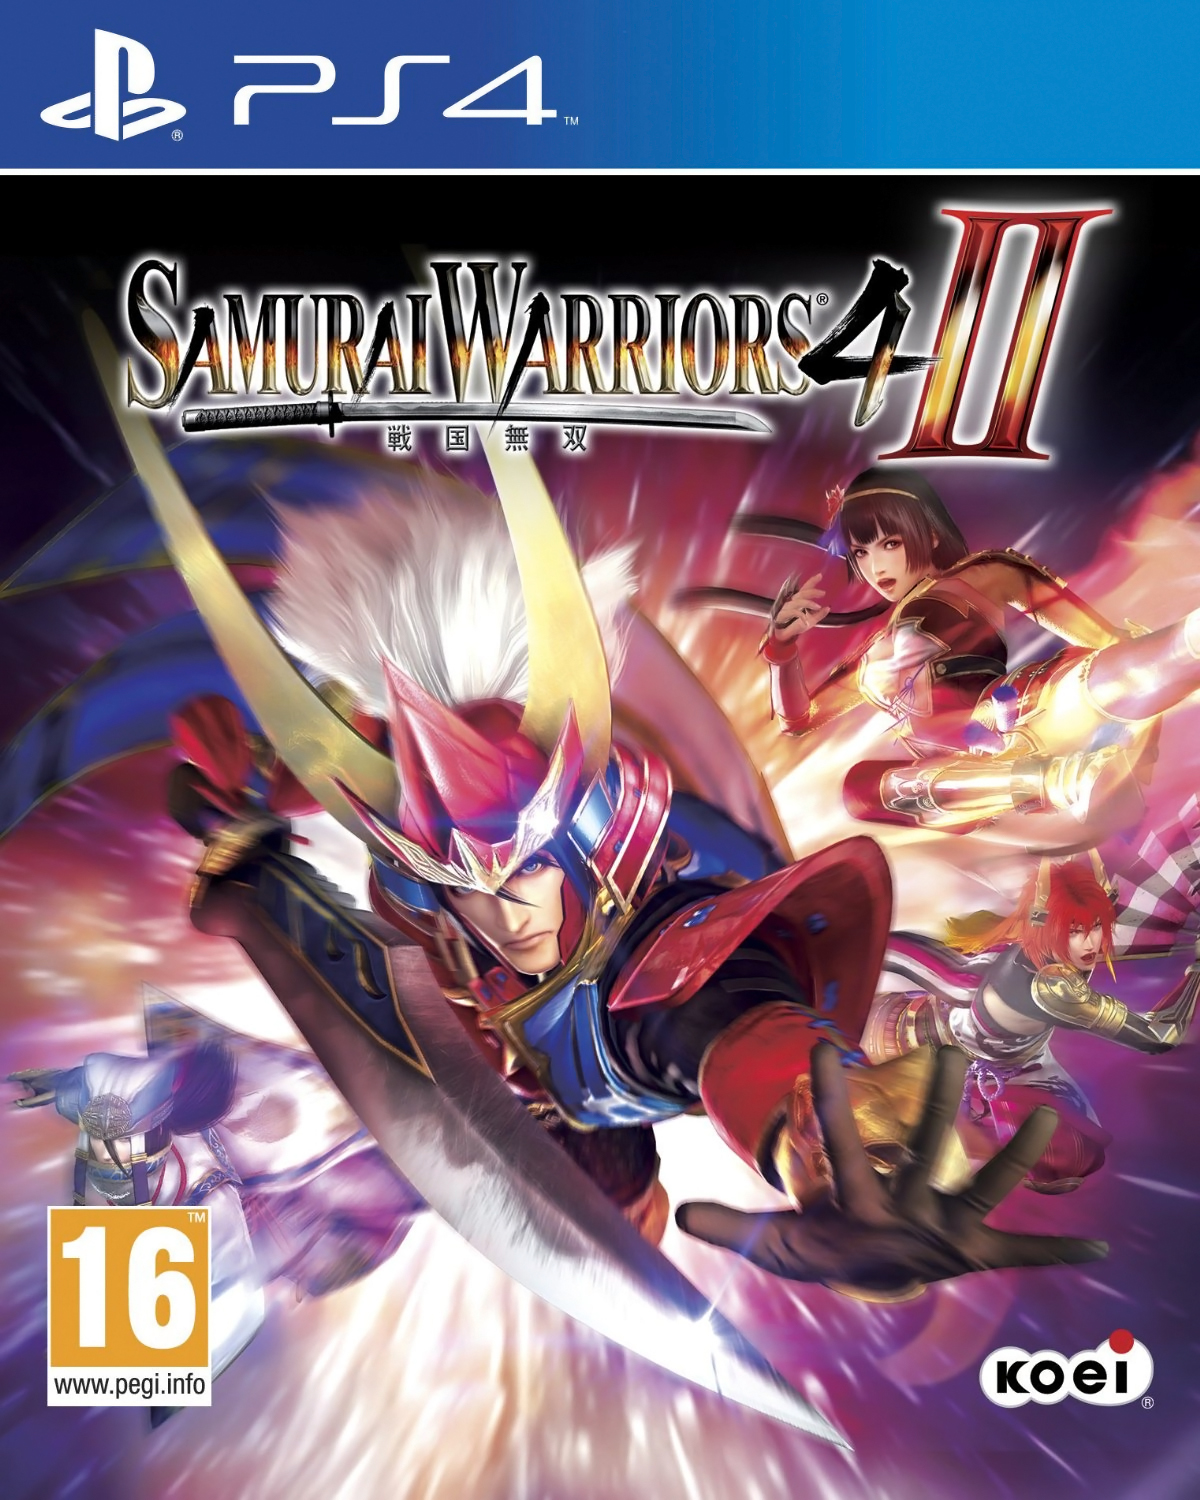 samurai warriors 4 ii pc release date